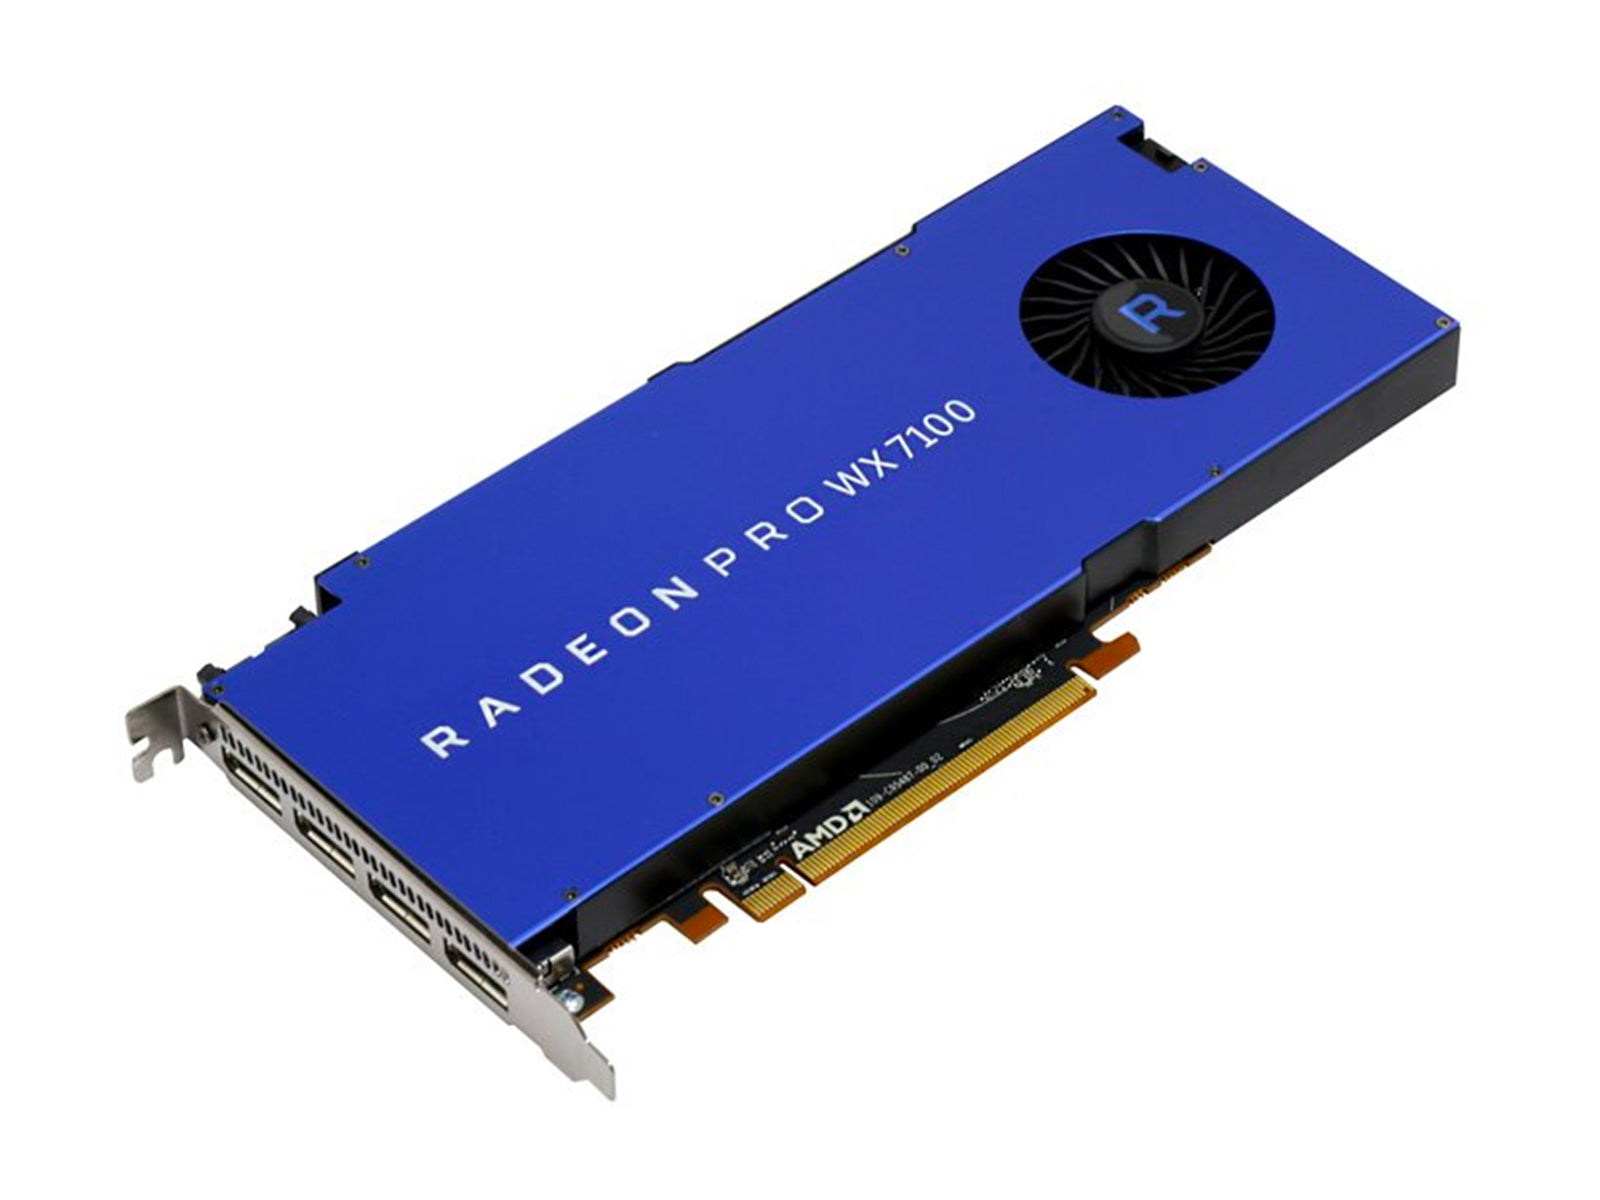 AMD Radeon Pro WX 7100 8GB Graphics Card (100-505826) Monitors.com 